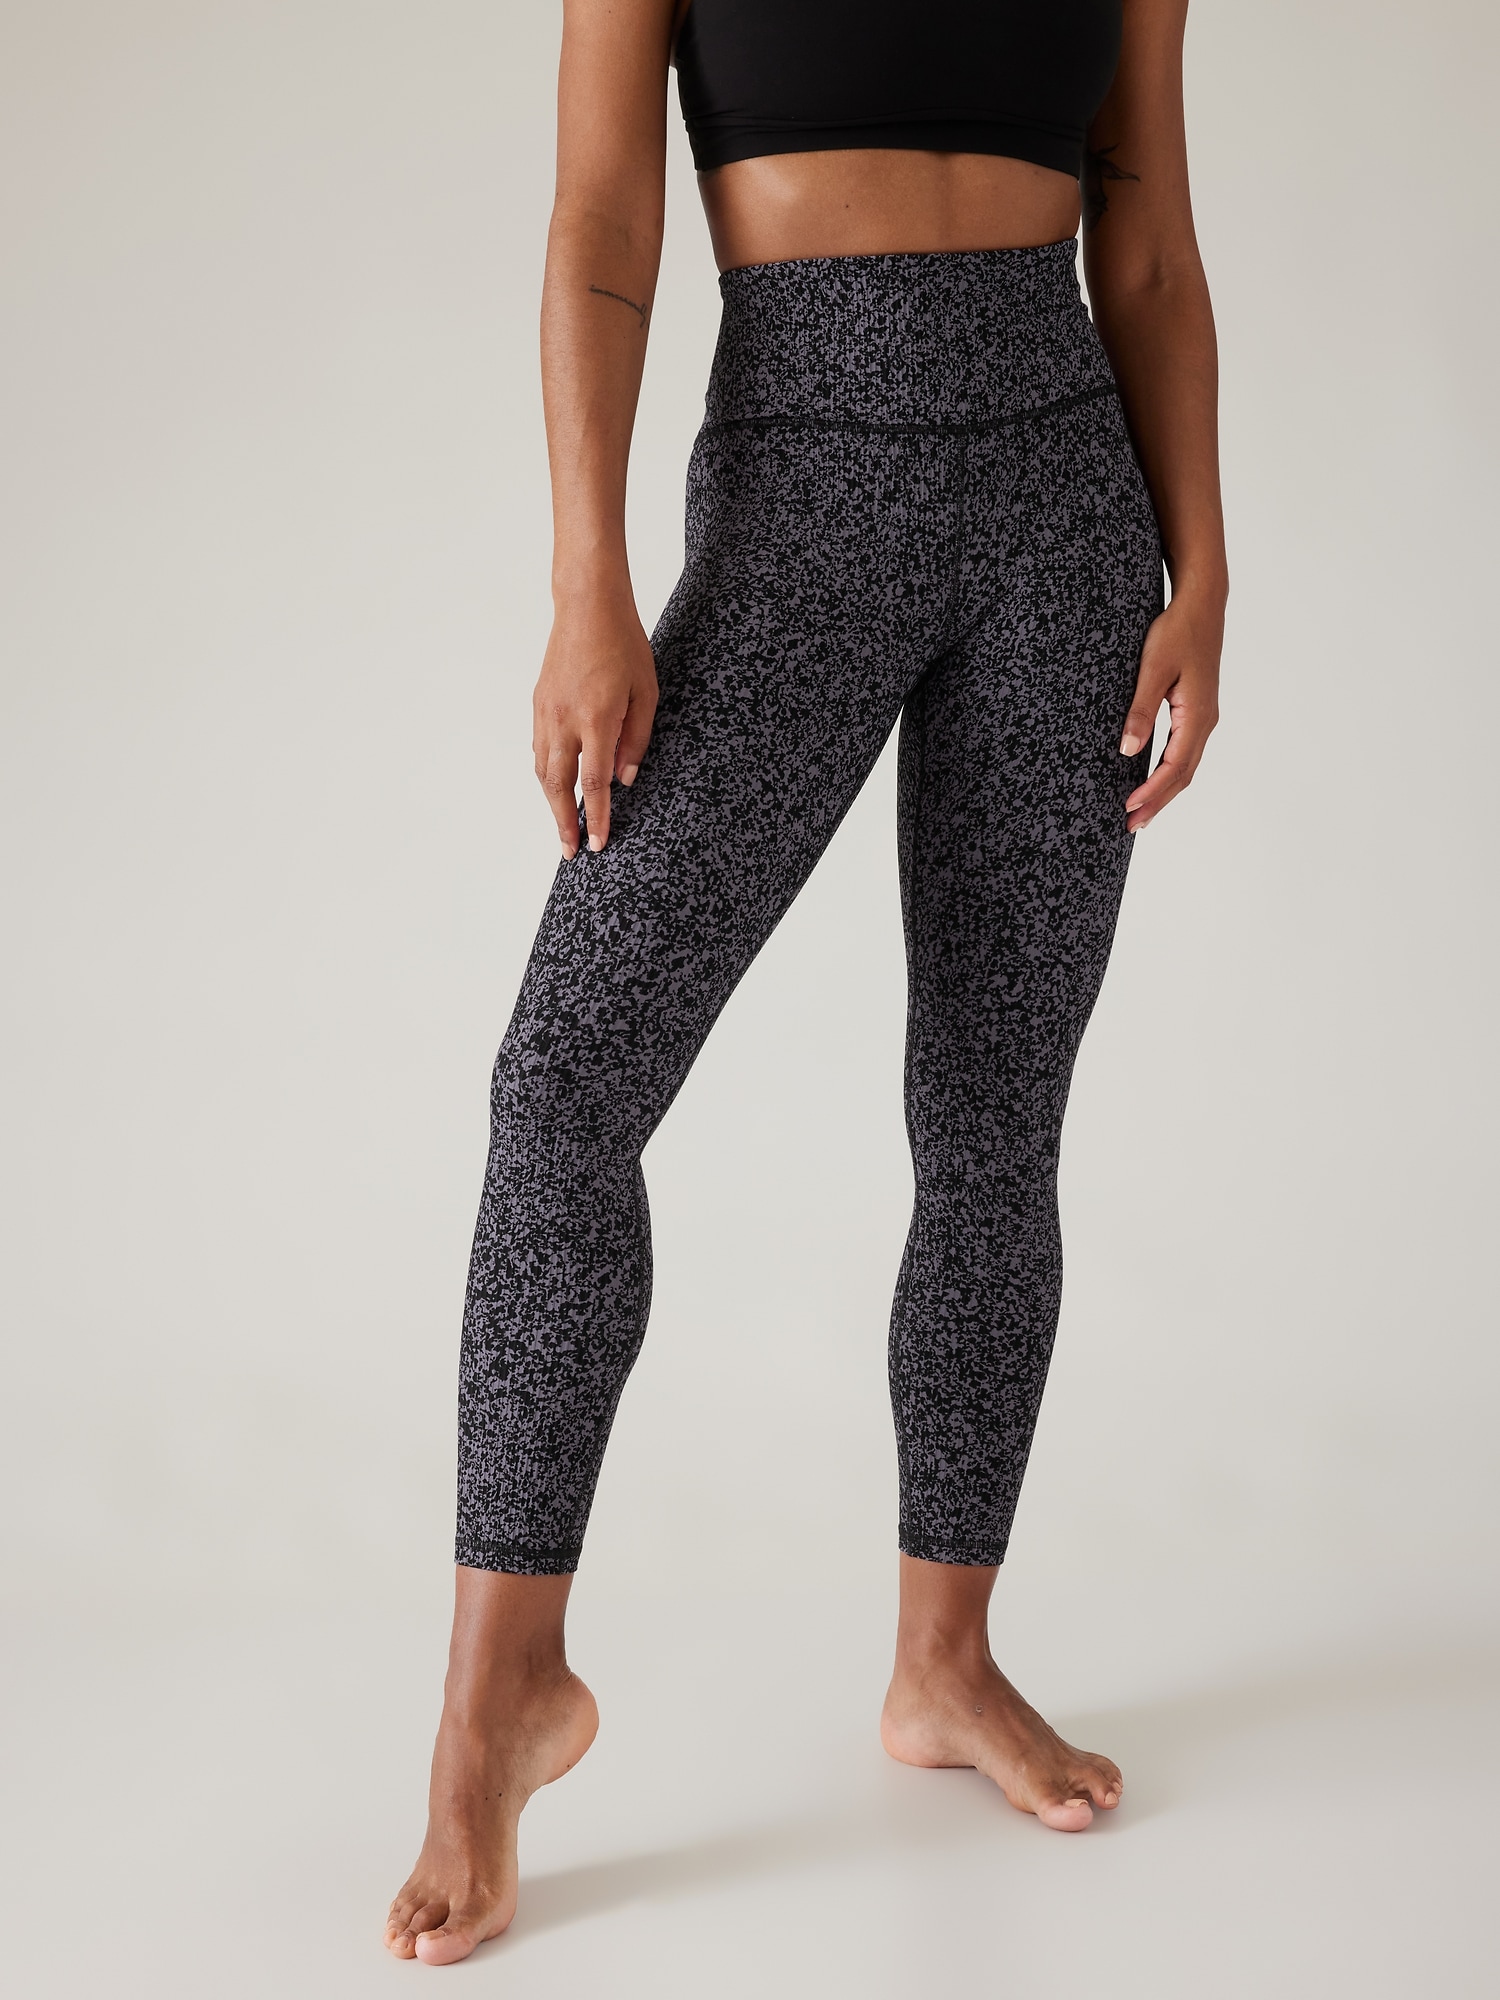 Athleta Barre Cinch Pants Gray Soft Stretch 353507 Women's Large L Yoga